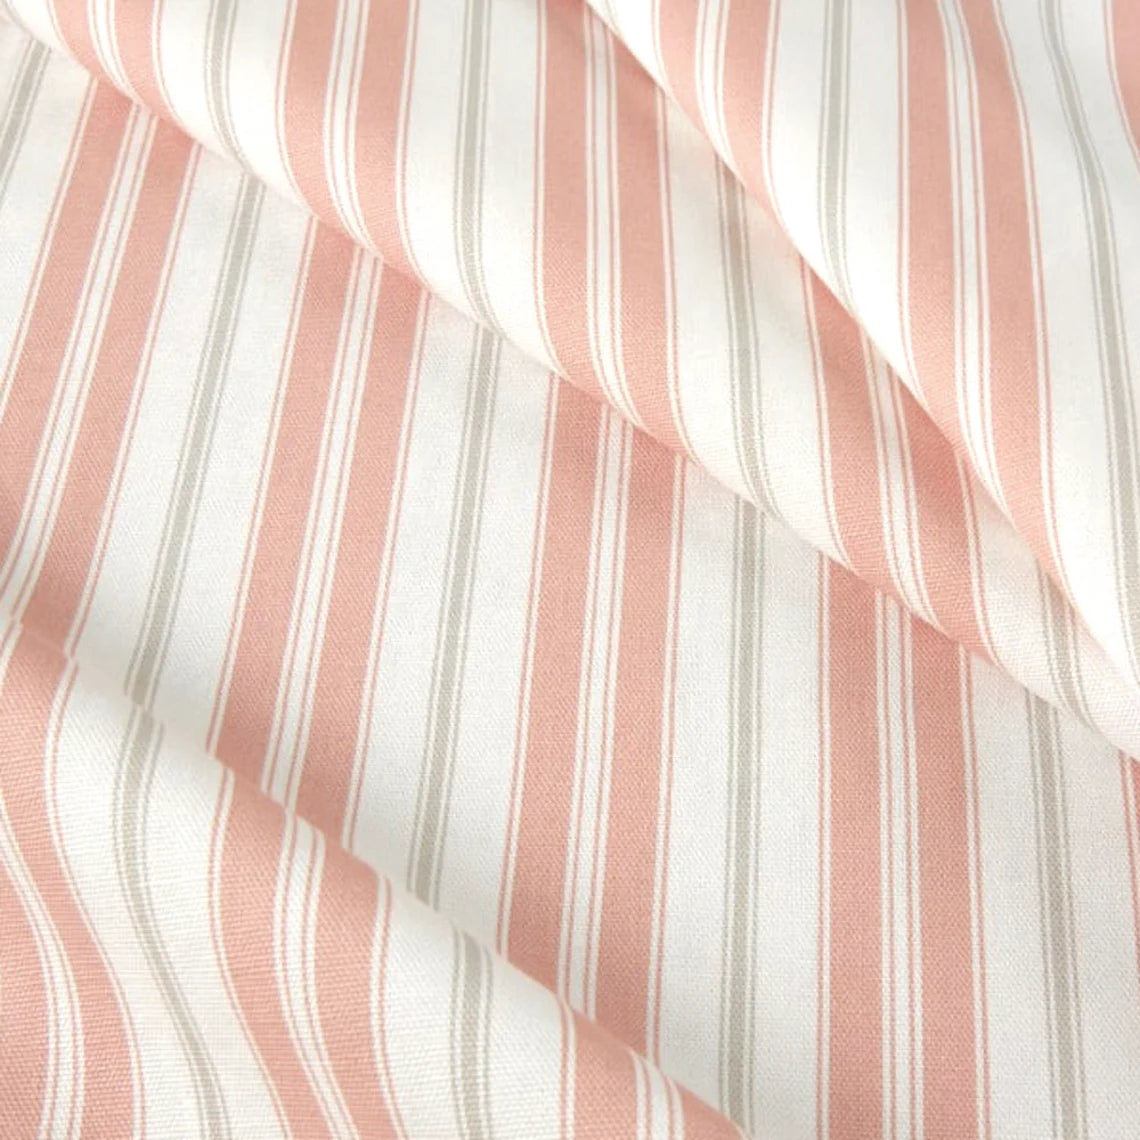 decorative pillows in newbury blush stripe- pink, gray, white